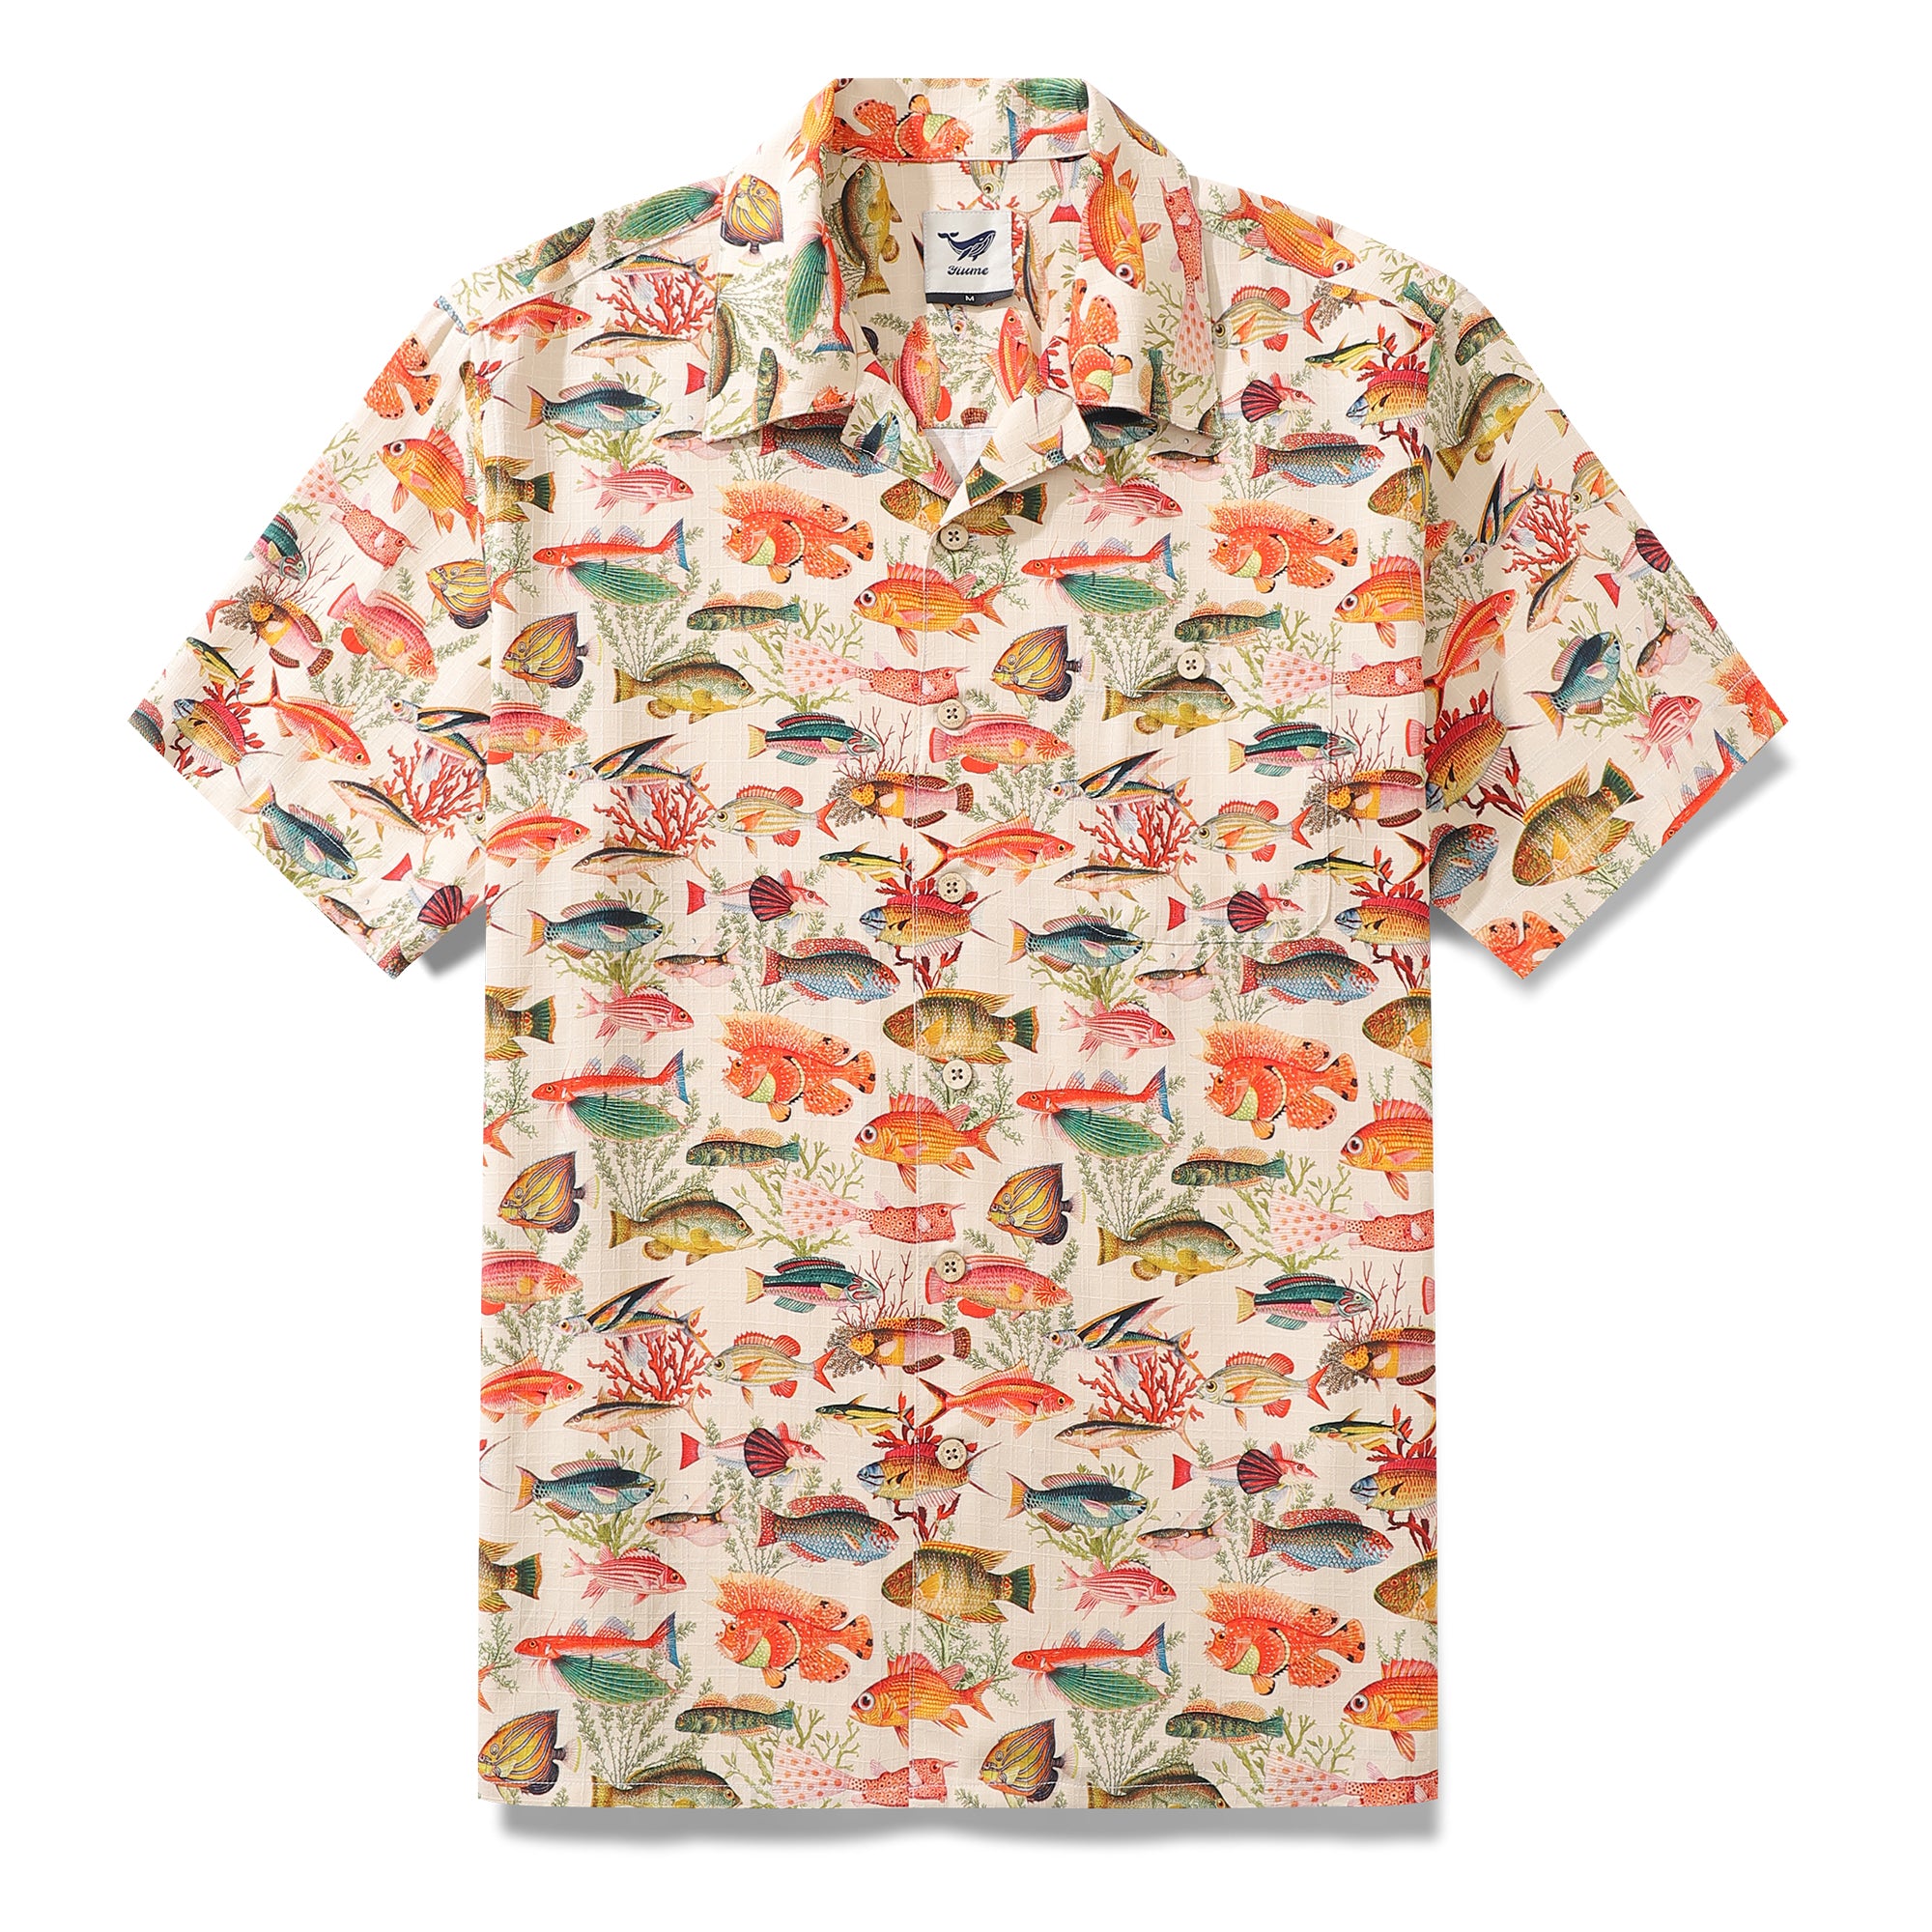 Herren-Hawaii-Hemd mit Meeres- und Fischmotiv, Camp-Kragen, kurzärmliges Aloha-Hemd – Seide